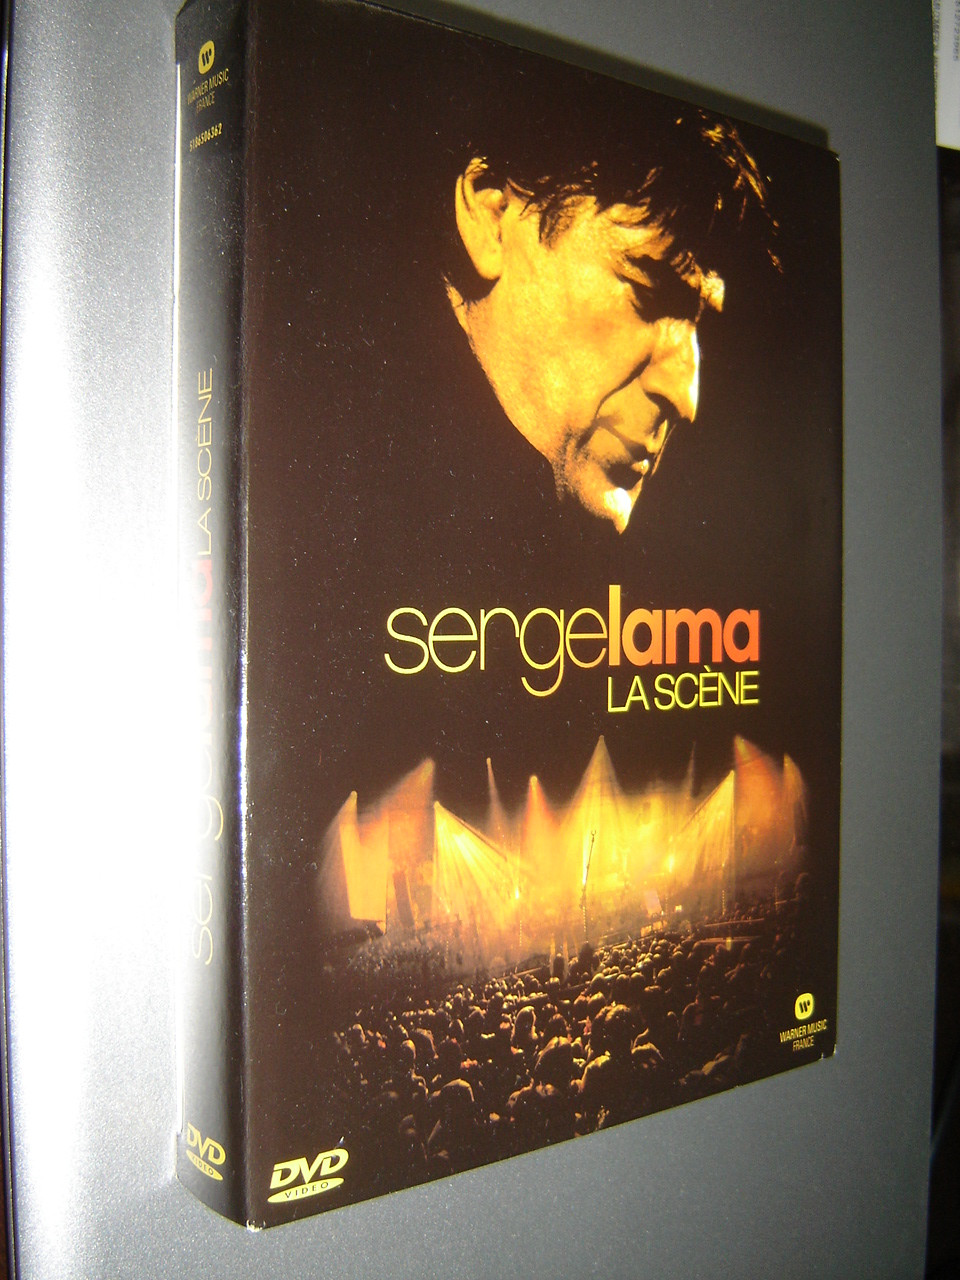 Serge Lama: La Scene (4 discs edition) / REGION 2 PAL DVD -  bibleinmylanguage